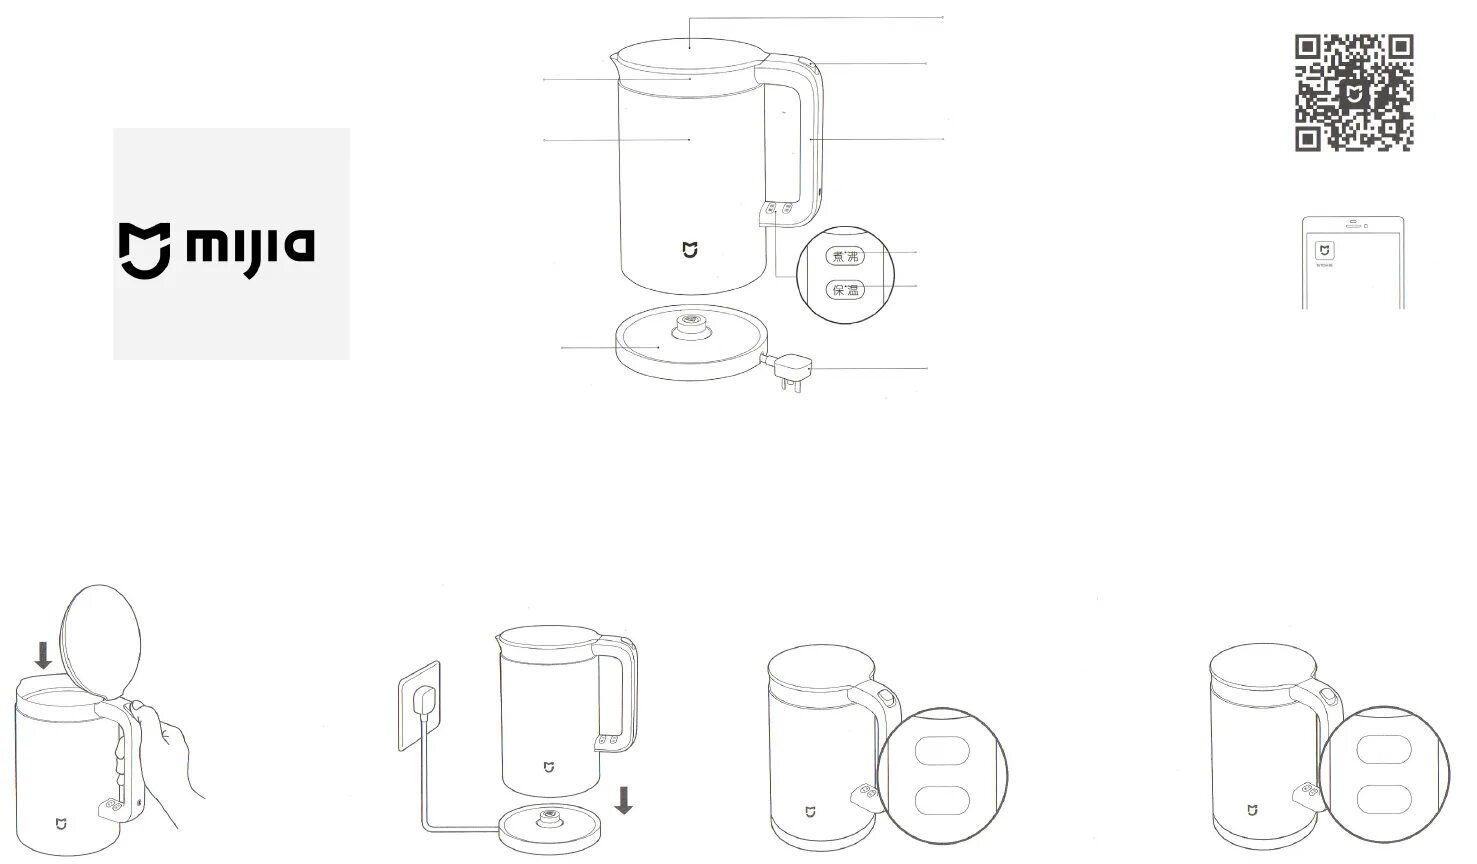 Схема Xiaomi Smart kettle. Инструкция к чайнику Xiaomi. Электросхема чайника Xiaomi. Чайник Xiaomi Mijia схема платы.